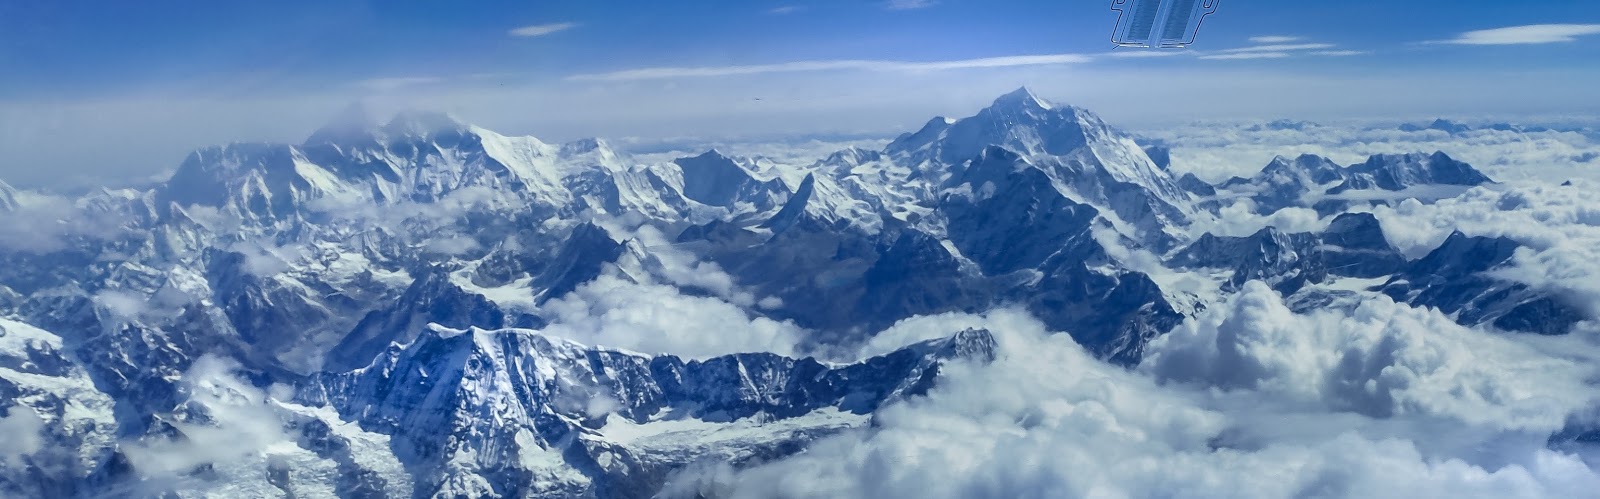 Catatan Ardis Family Pengalaman Above The Summit Of Mt Everest